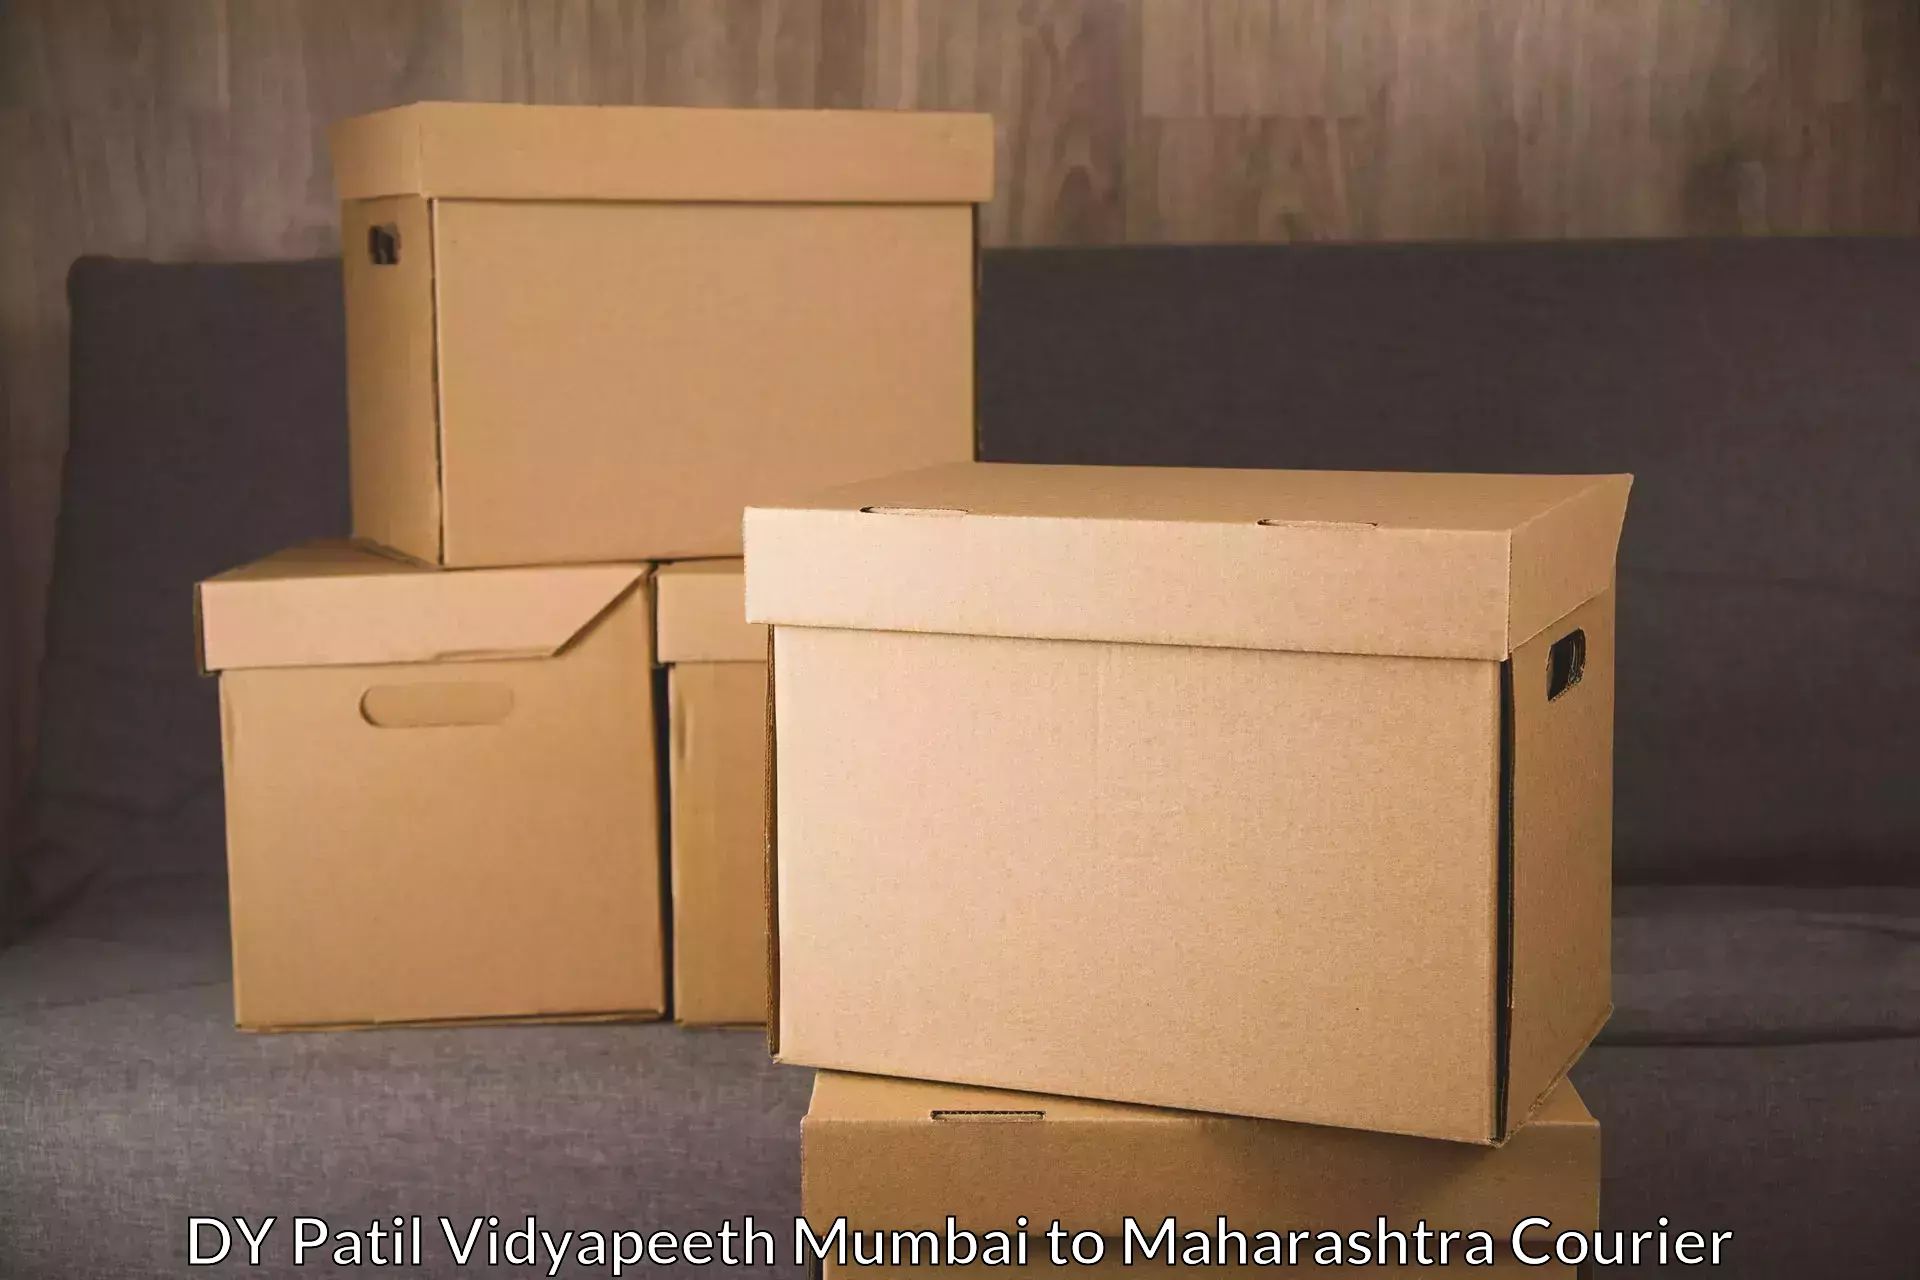 Express courier capabilities DY Patil Vidyapeeth Mumbai to Osmanabad